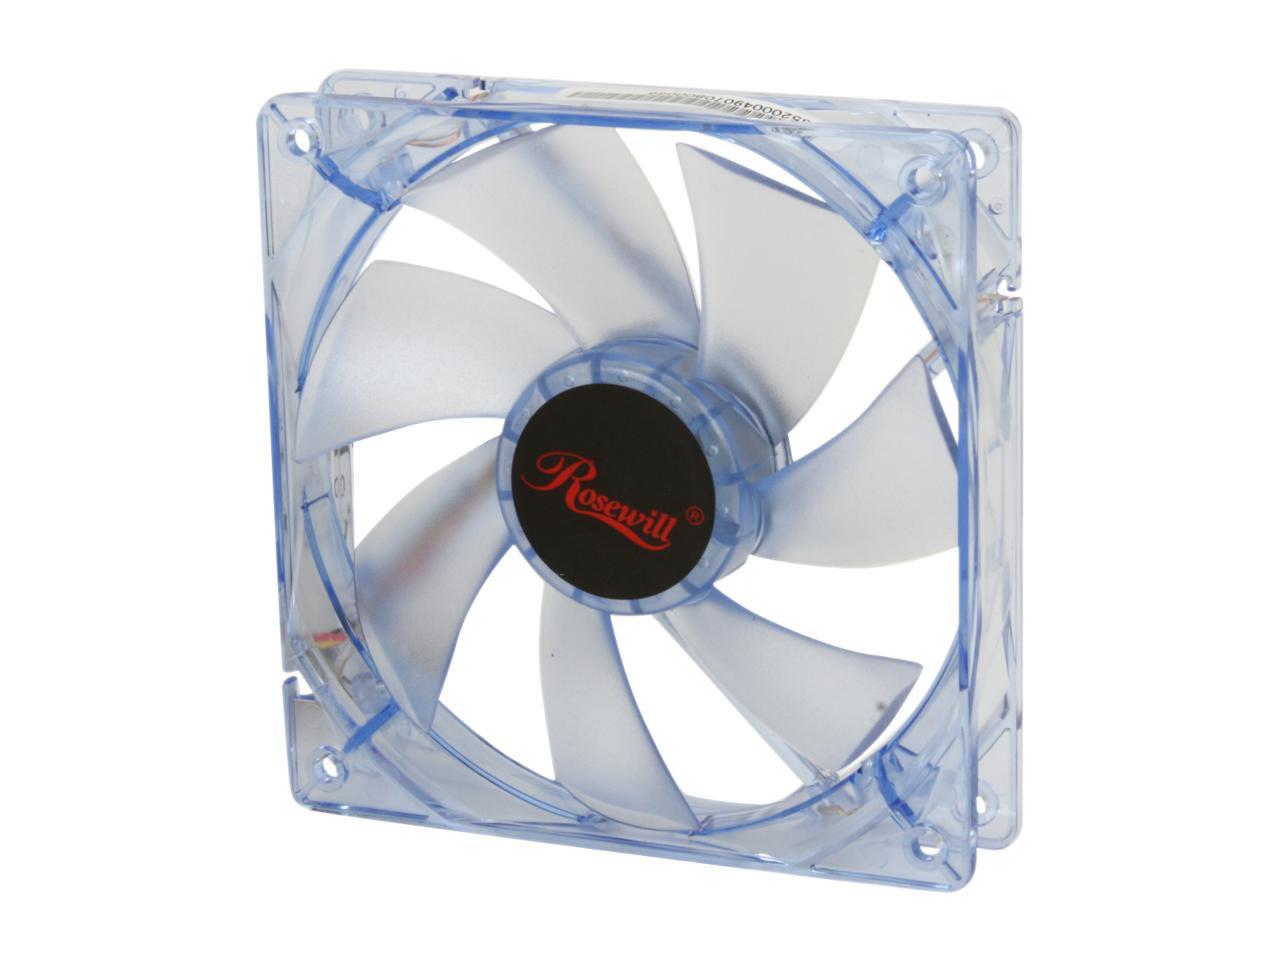 Rosewill 120mm Blue Light Case Fan w/ LP4 Adapter $9 + Free Shipping